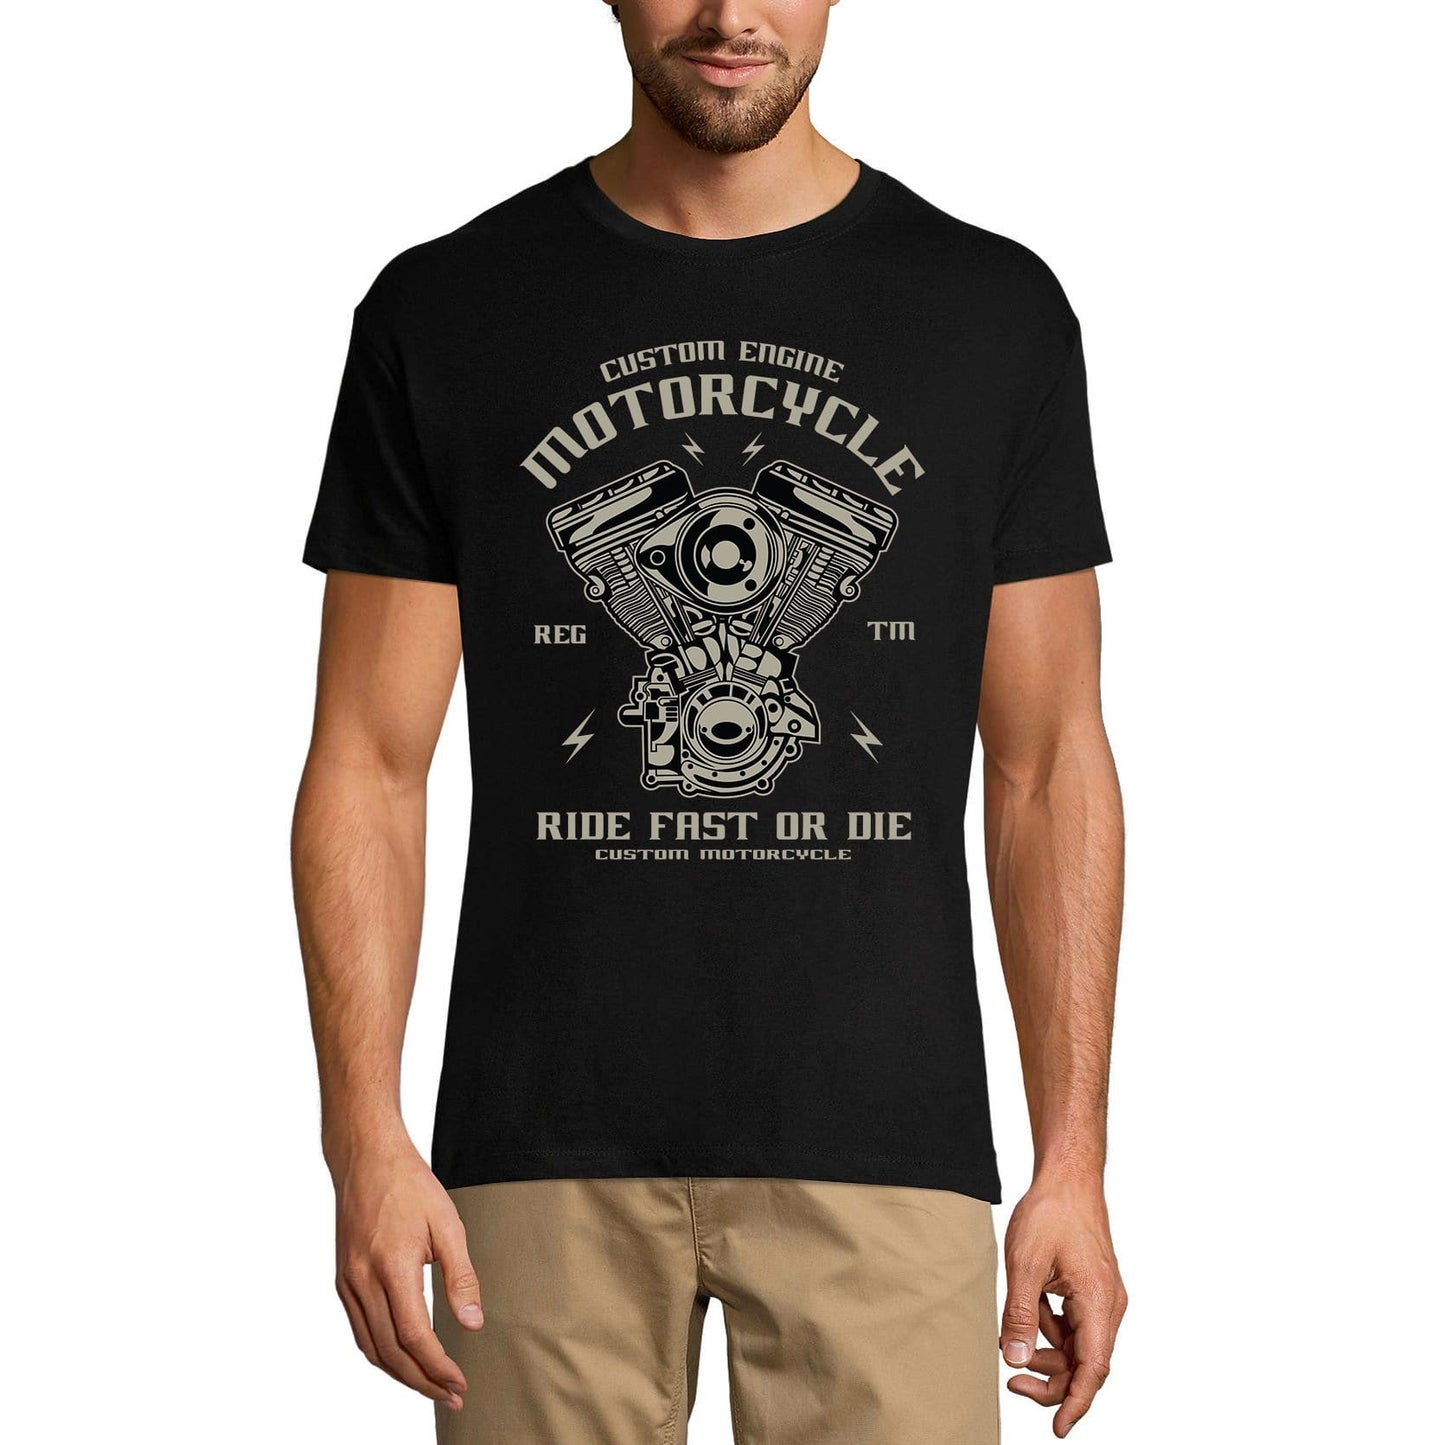 ULTRABASIC Men's T-Shirt Custom Engine Motorcycle - Ride Fast or Die Tee Shirt